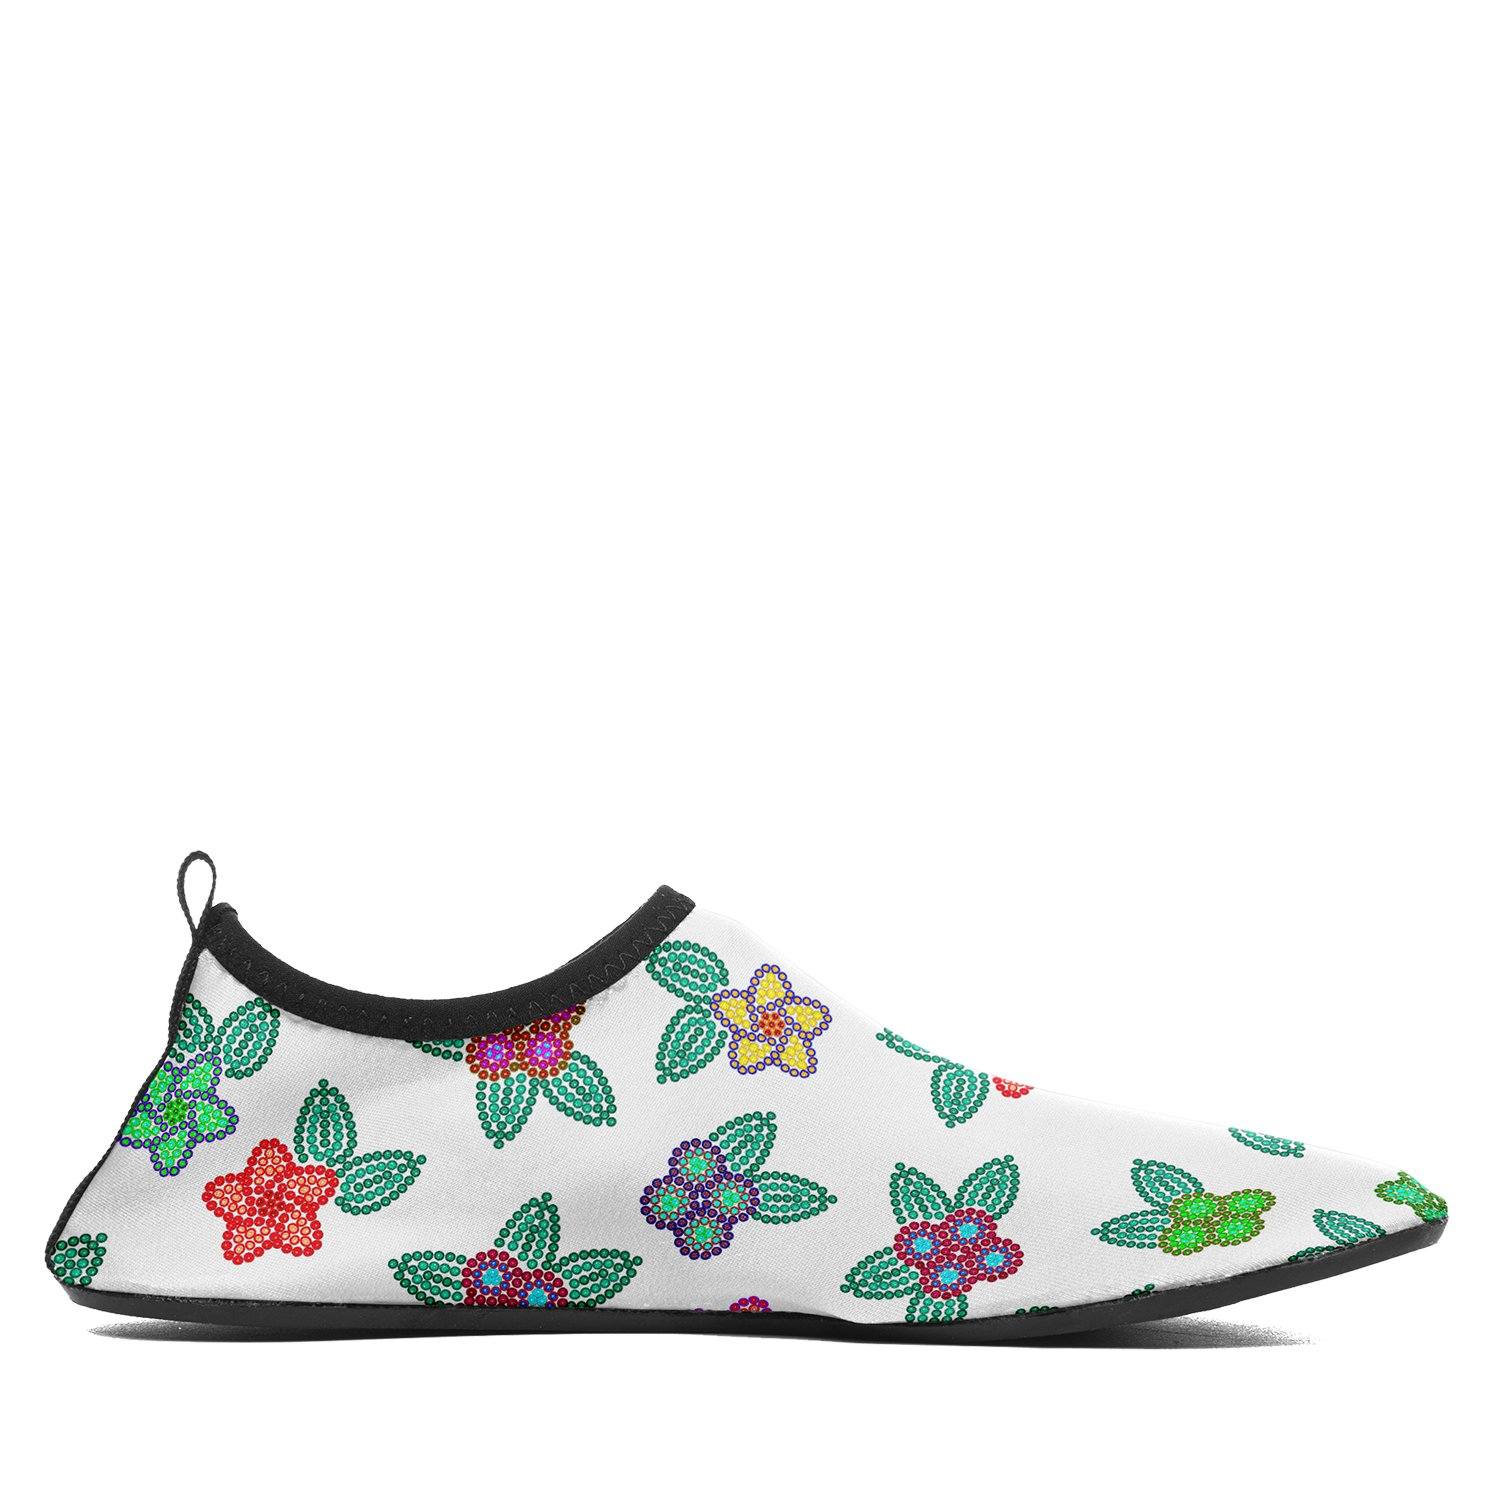 Berry Flowers White Sockamoccs Slip On Shoes Herman 